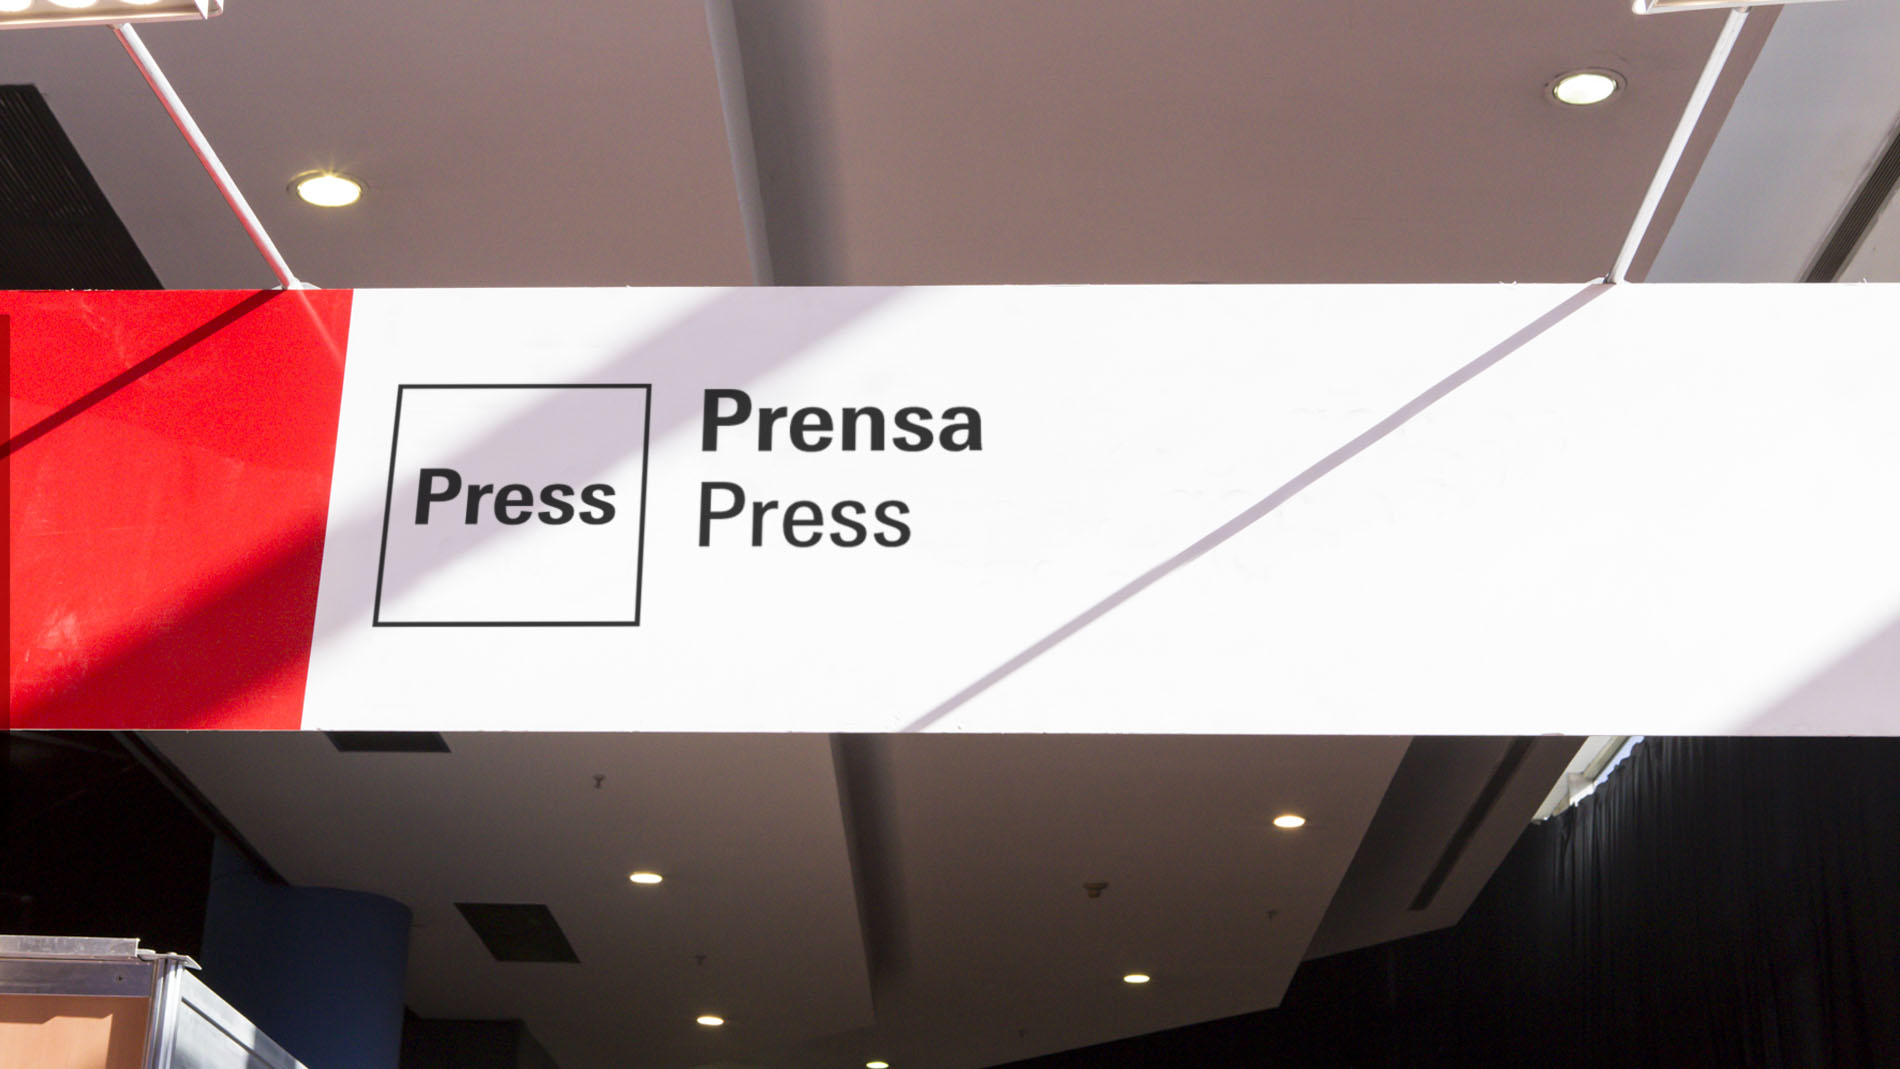 press